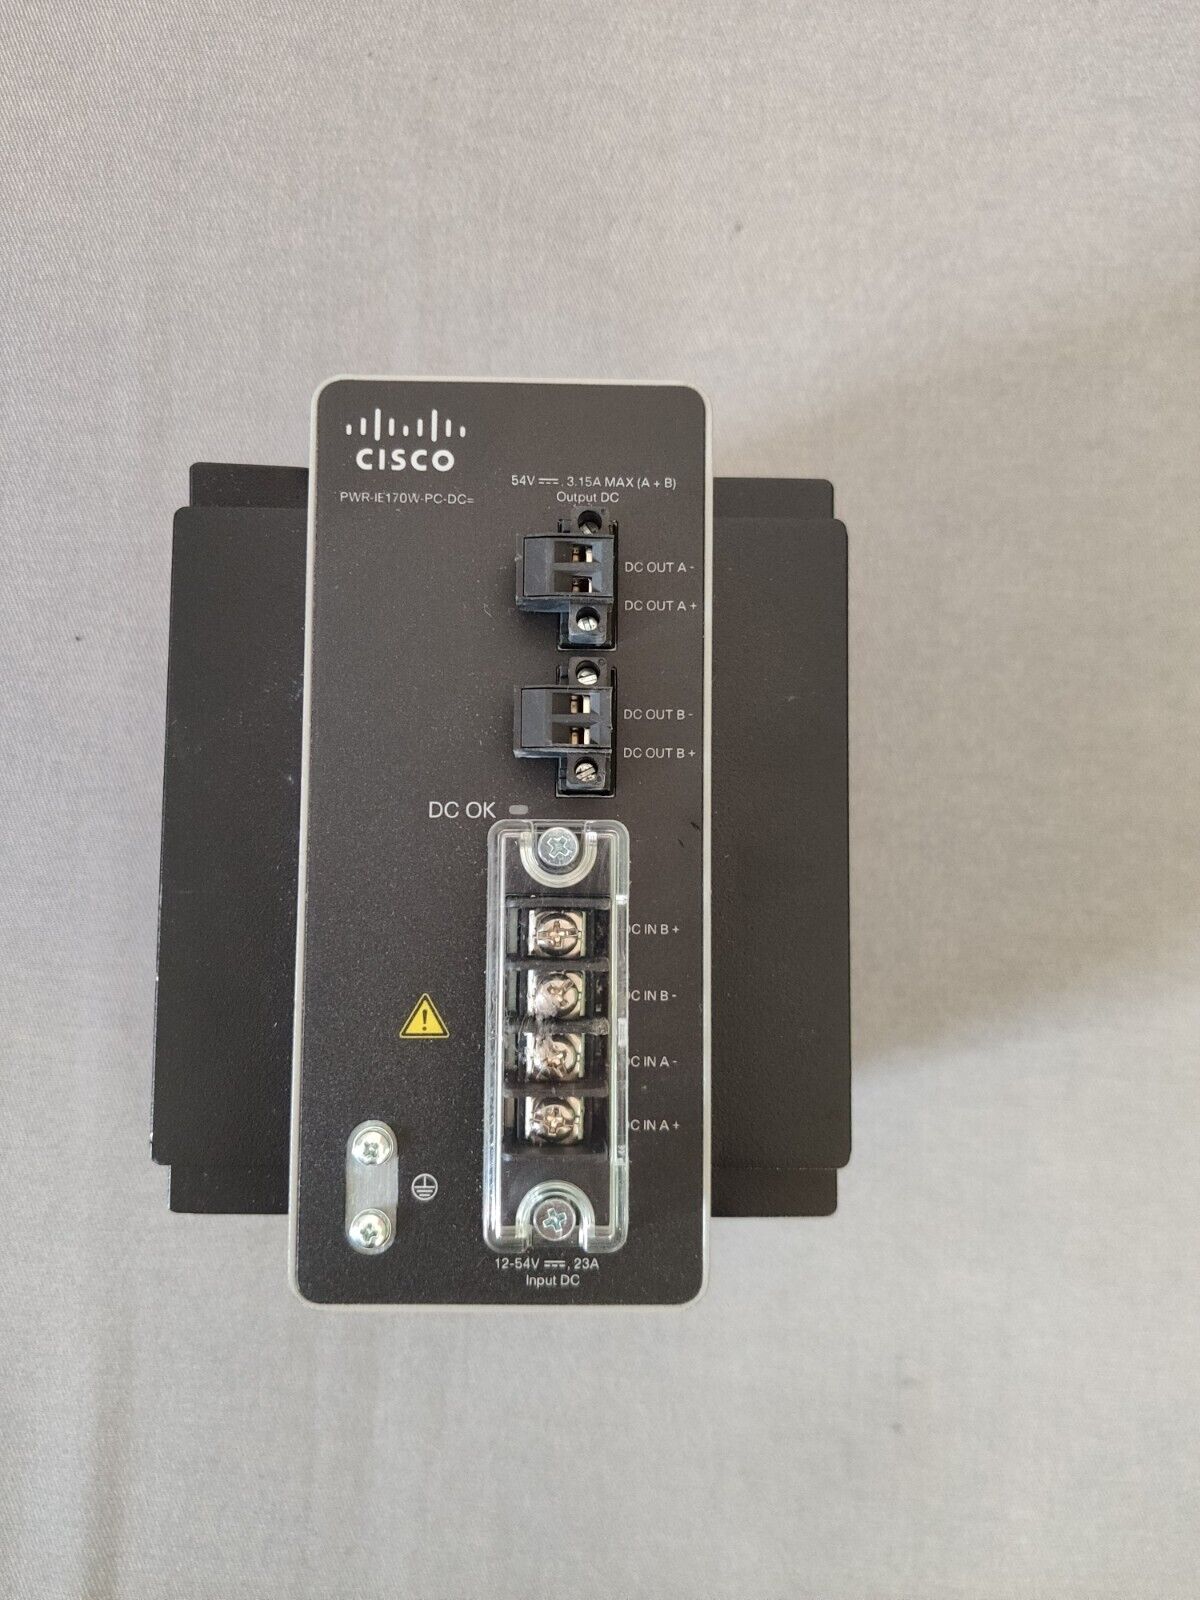 Genuine Cisco PWR-IE170W-PC-DC Power Supply for IE-4000 Switch Tested